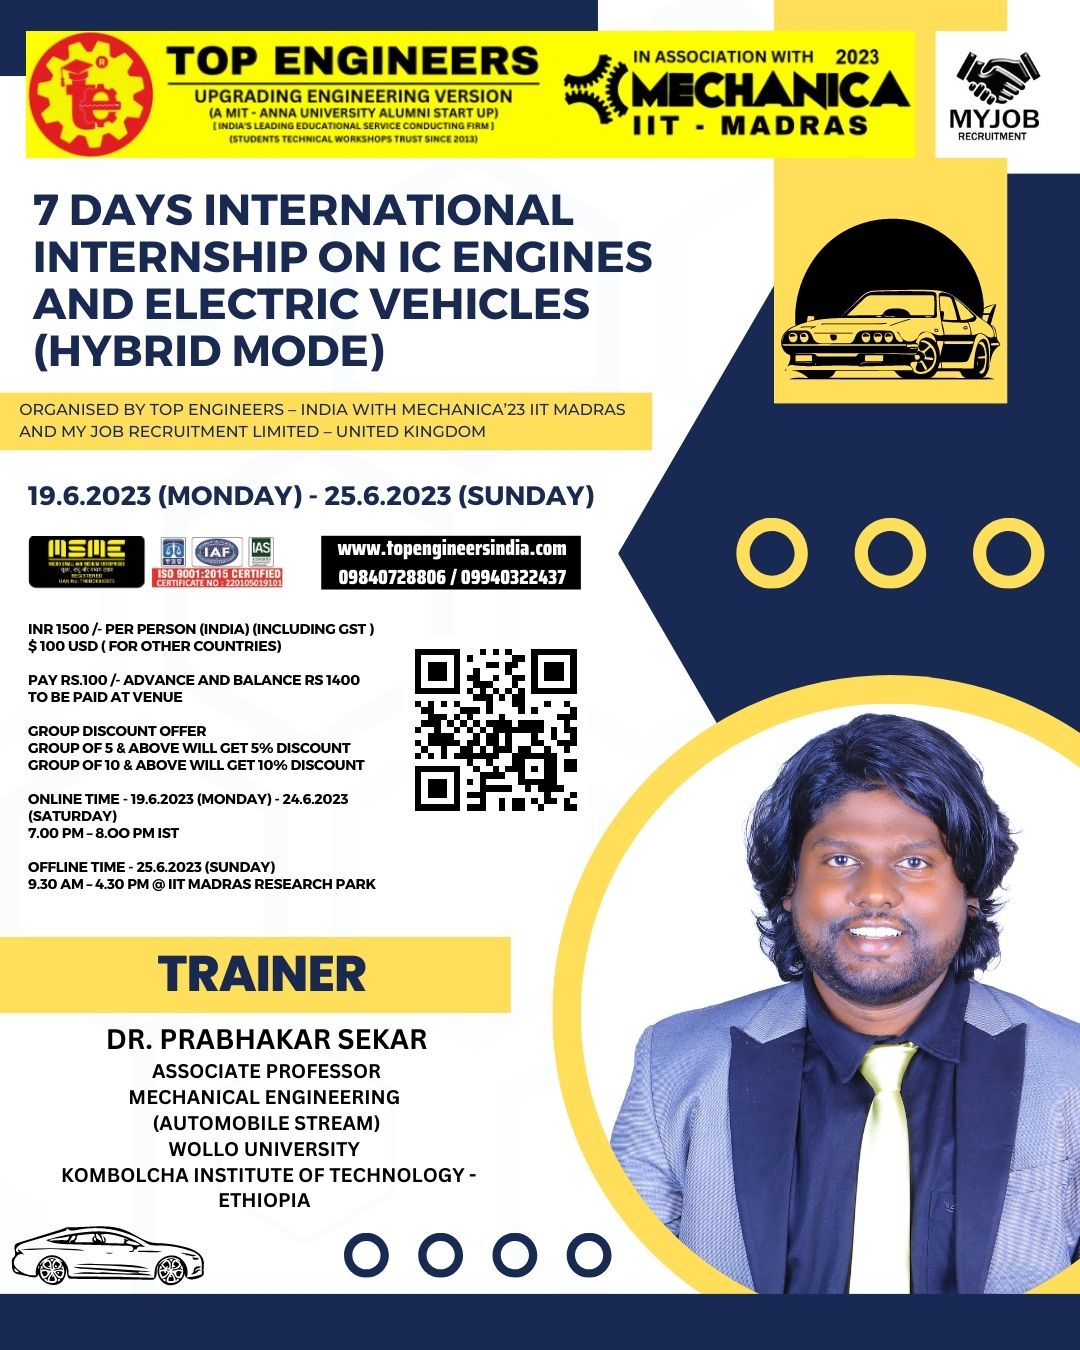 7 Days International Internship on IC Engines and Electric Vehicles (Hybrid Mode) 2023